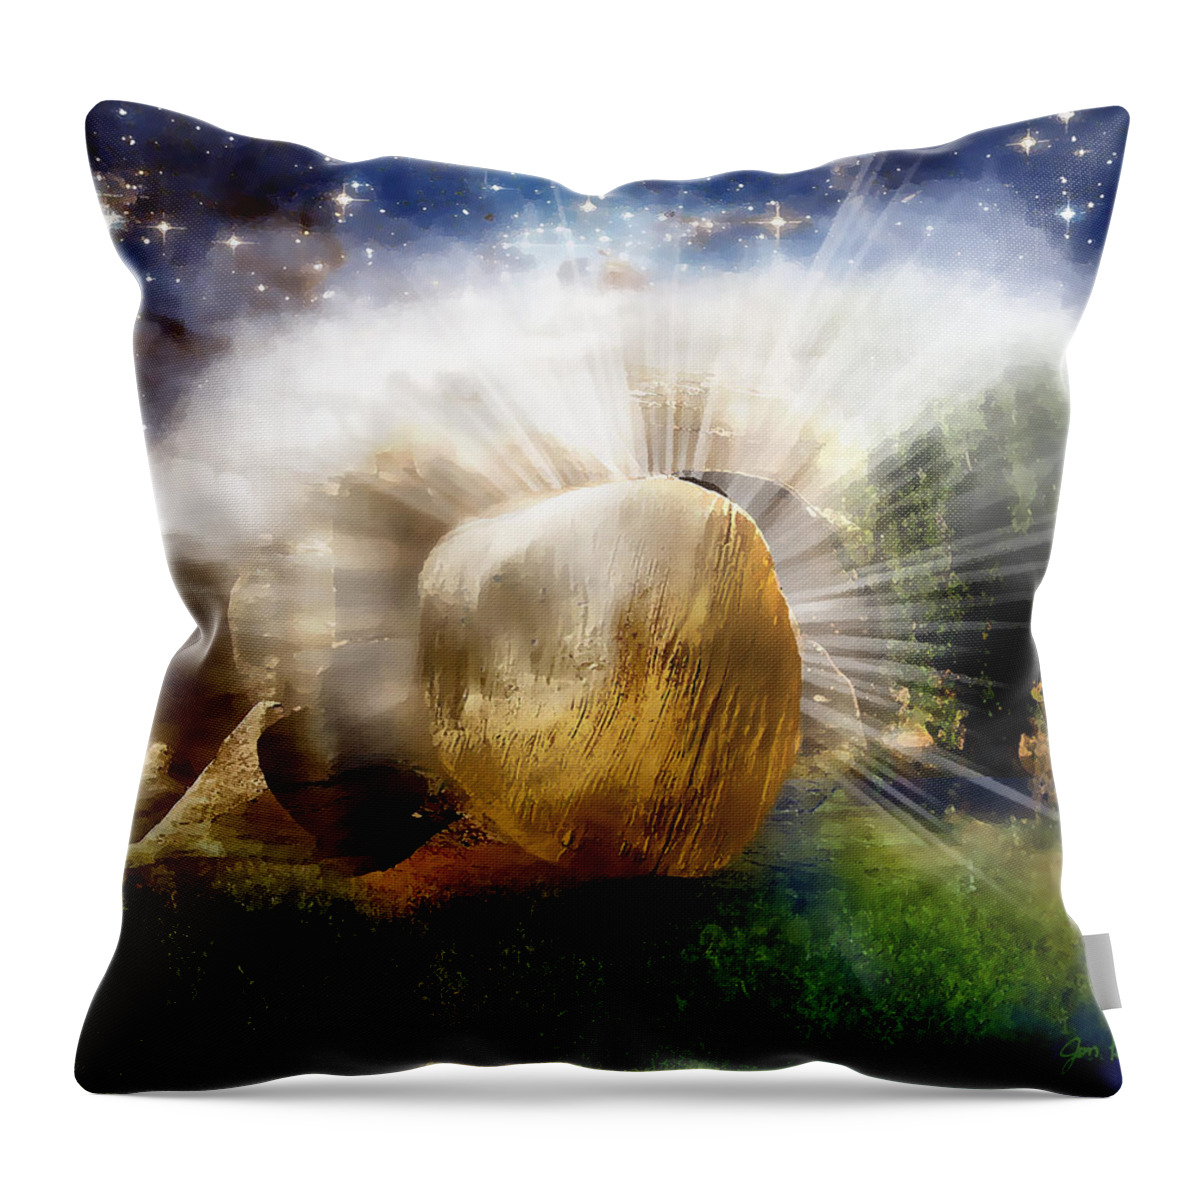 Risen Throw Pillow featuring the digital art Risen by Jennifer Page